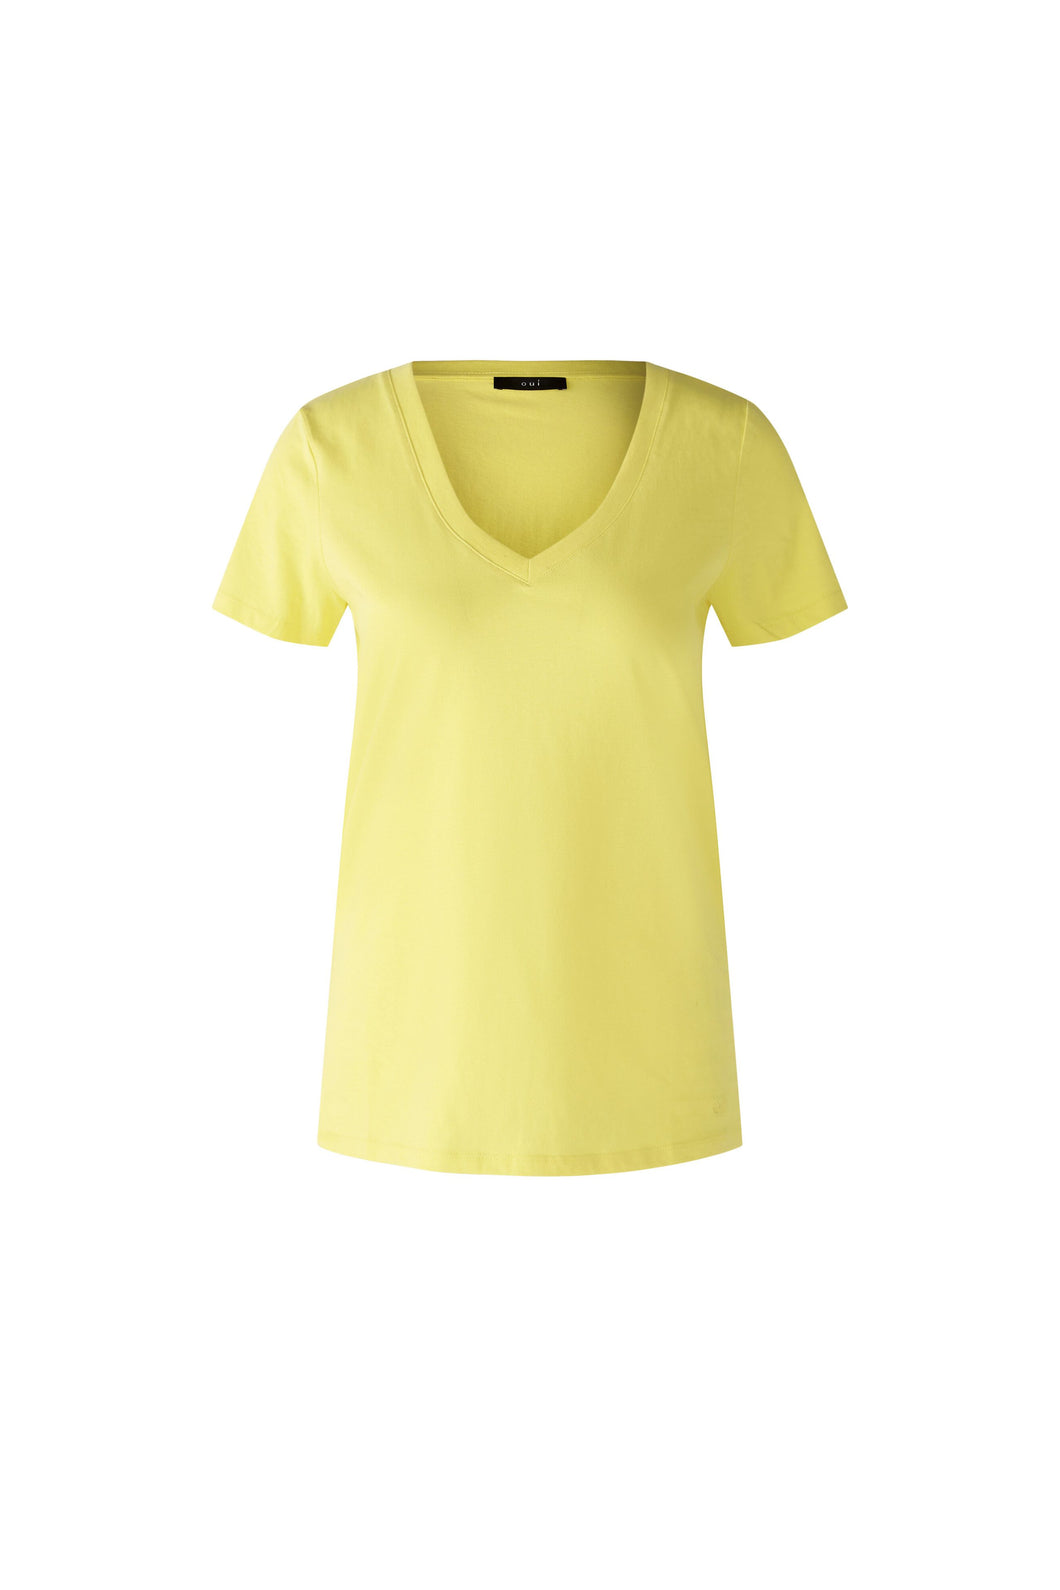 Oui - Carli T Shirt in Yellow